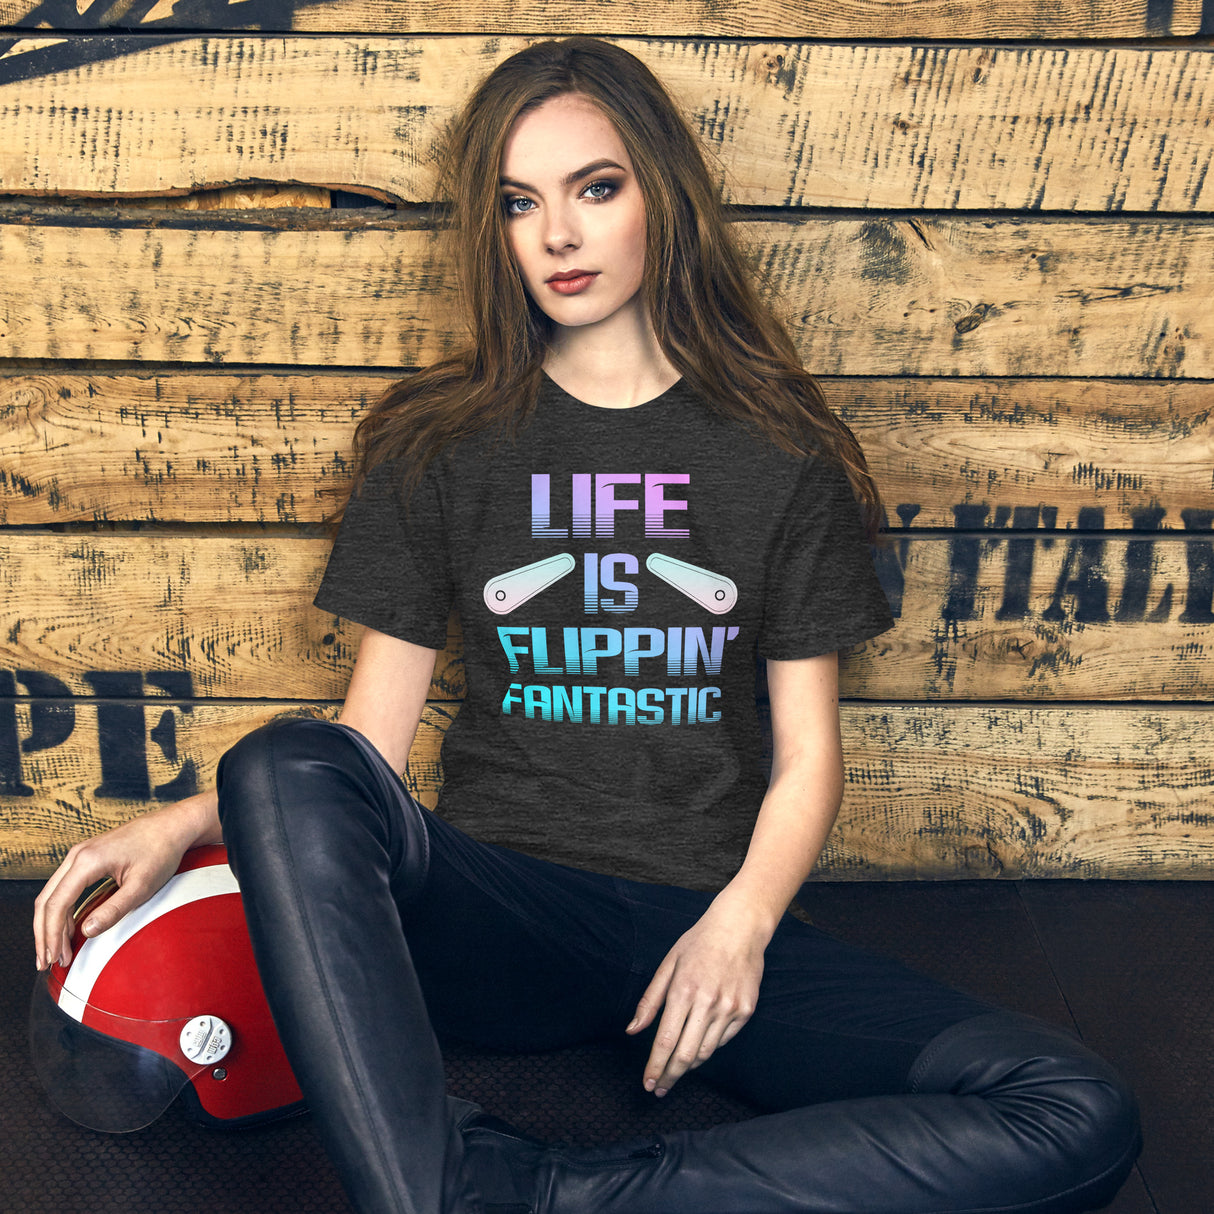 Life is Flipping Fantastic Women's Pinball Shirt